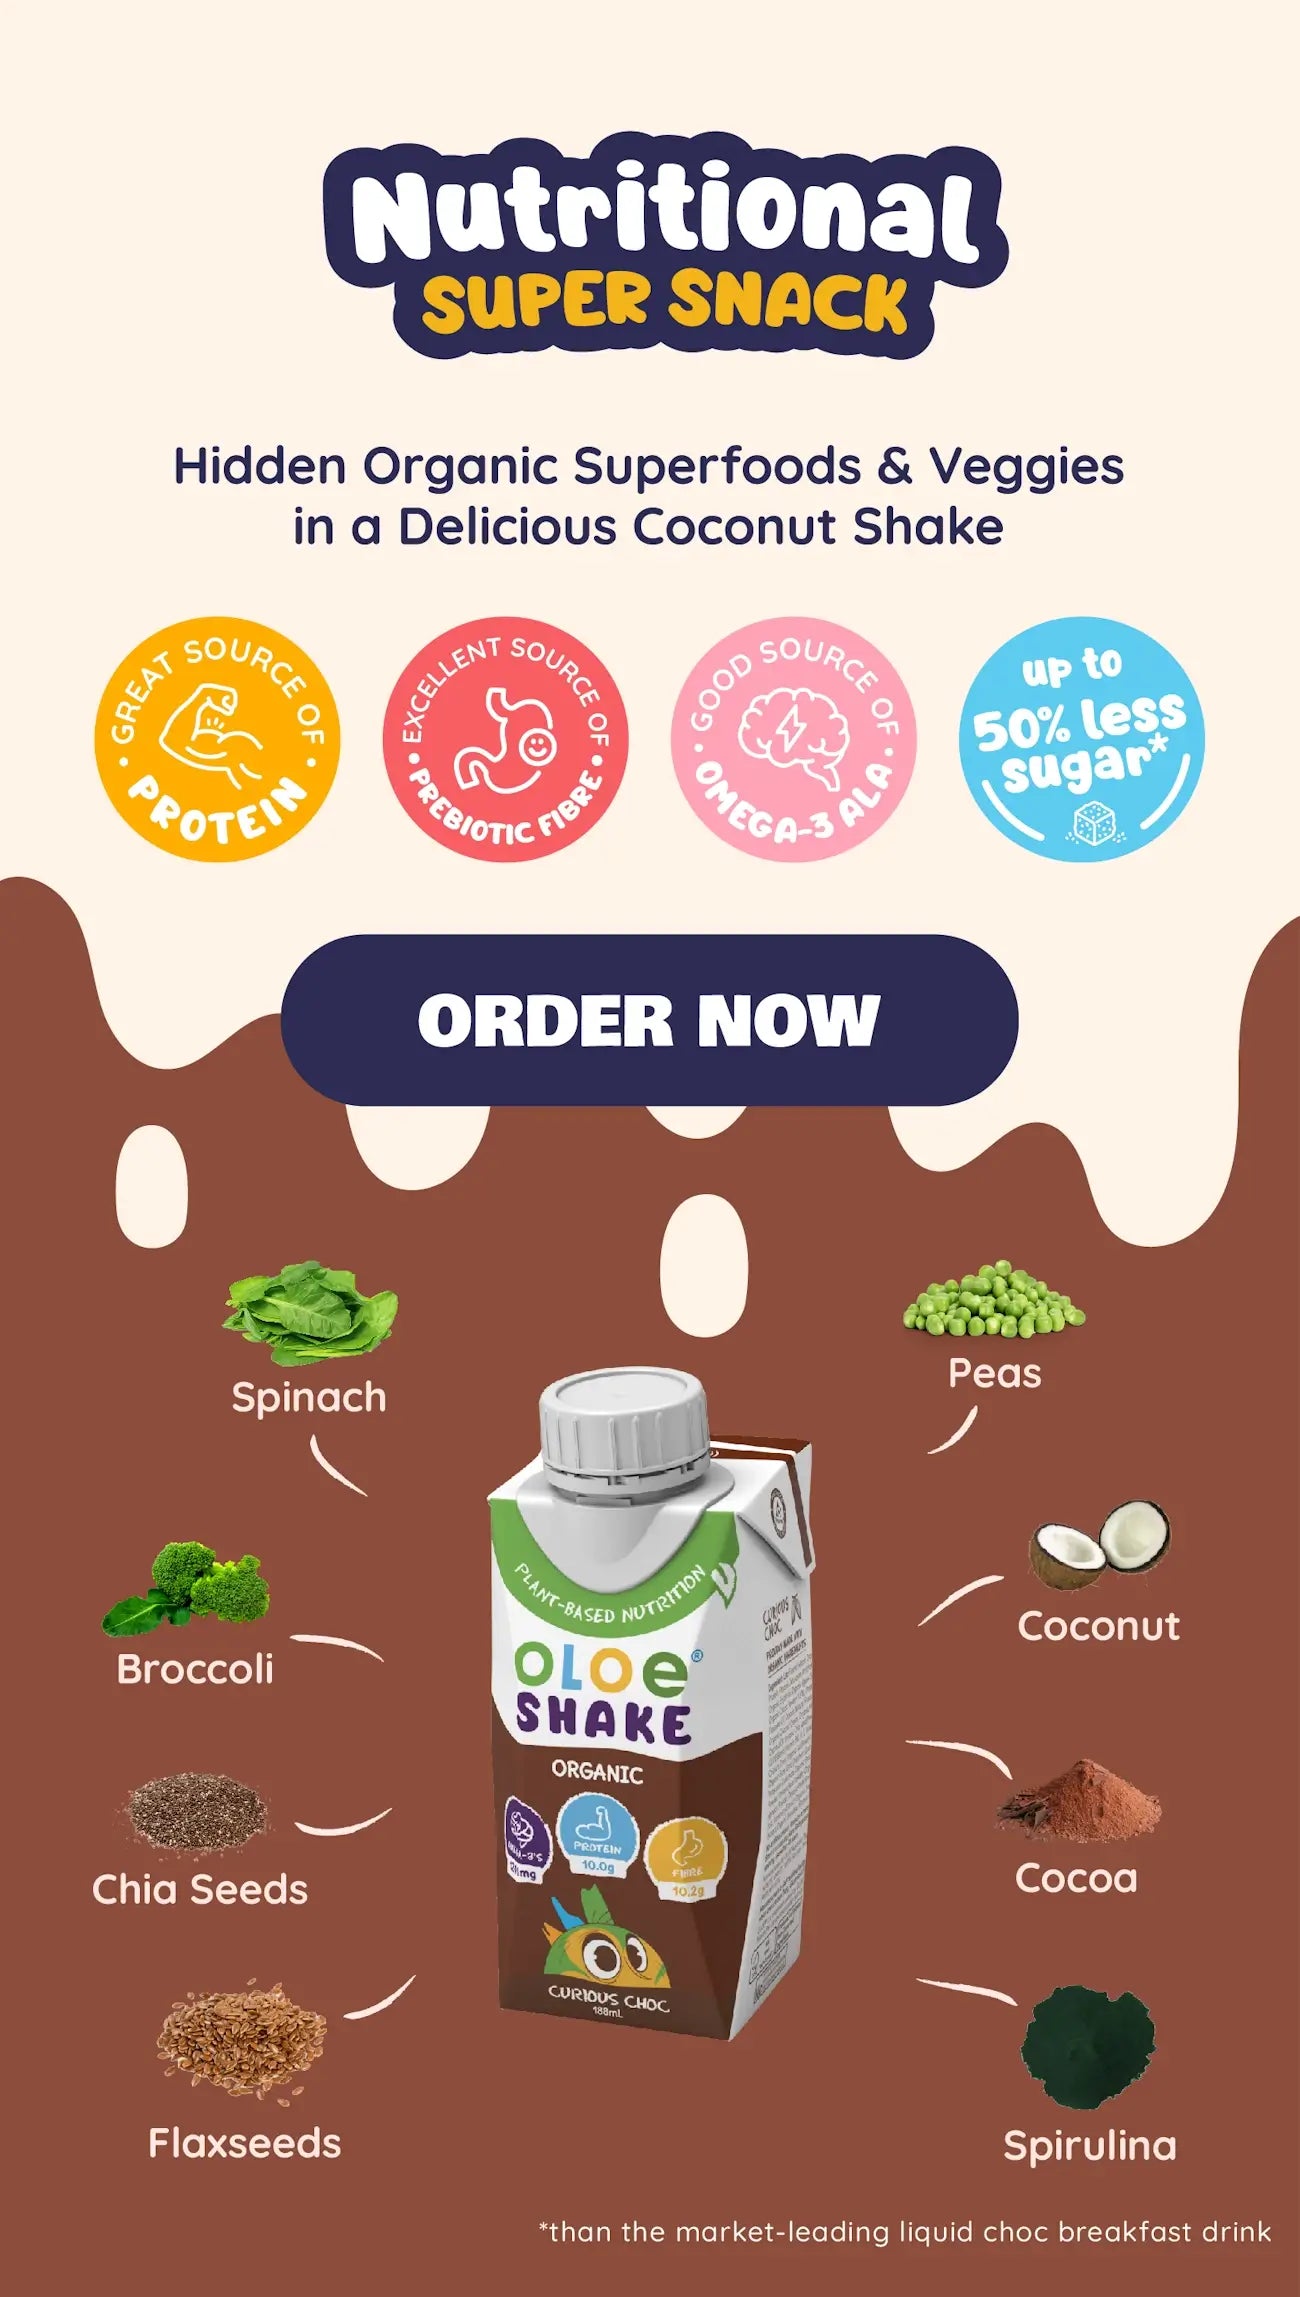 oloe-shake-mobile-desktop-banner-rectangular-new-flavour-launch-nutritional-super-snack